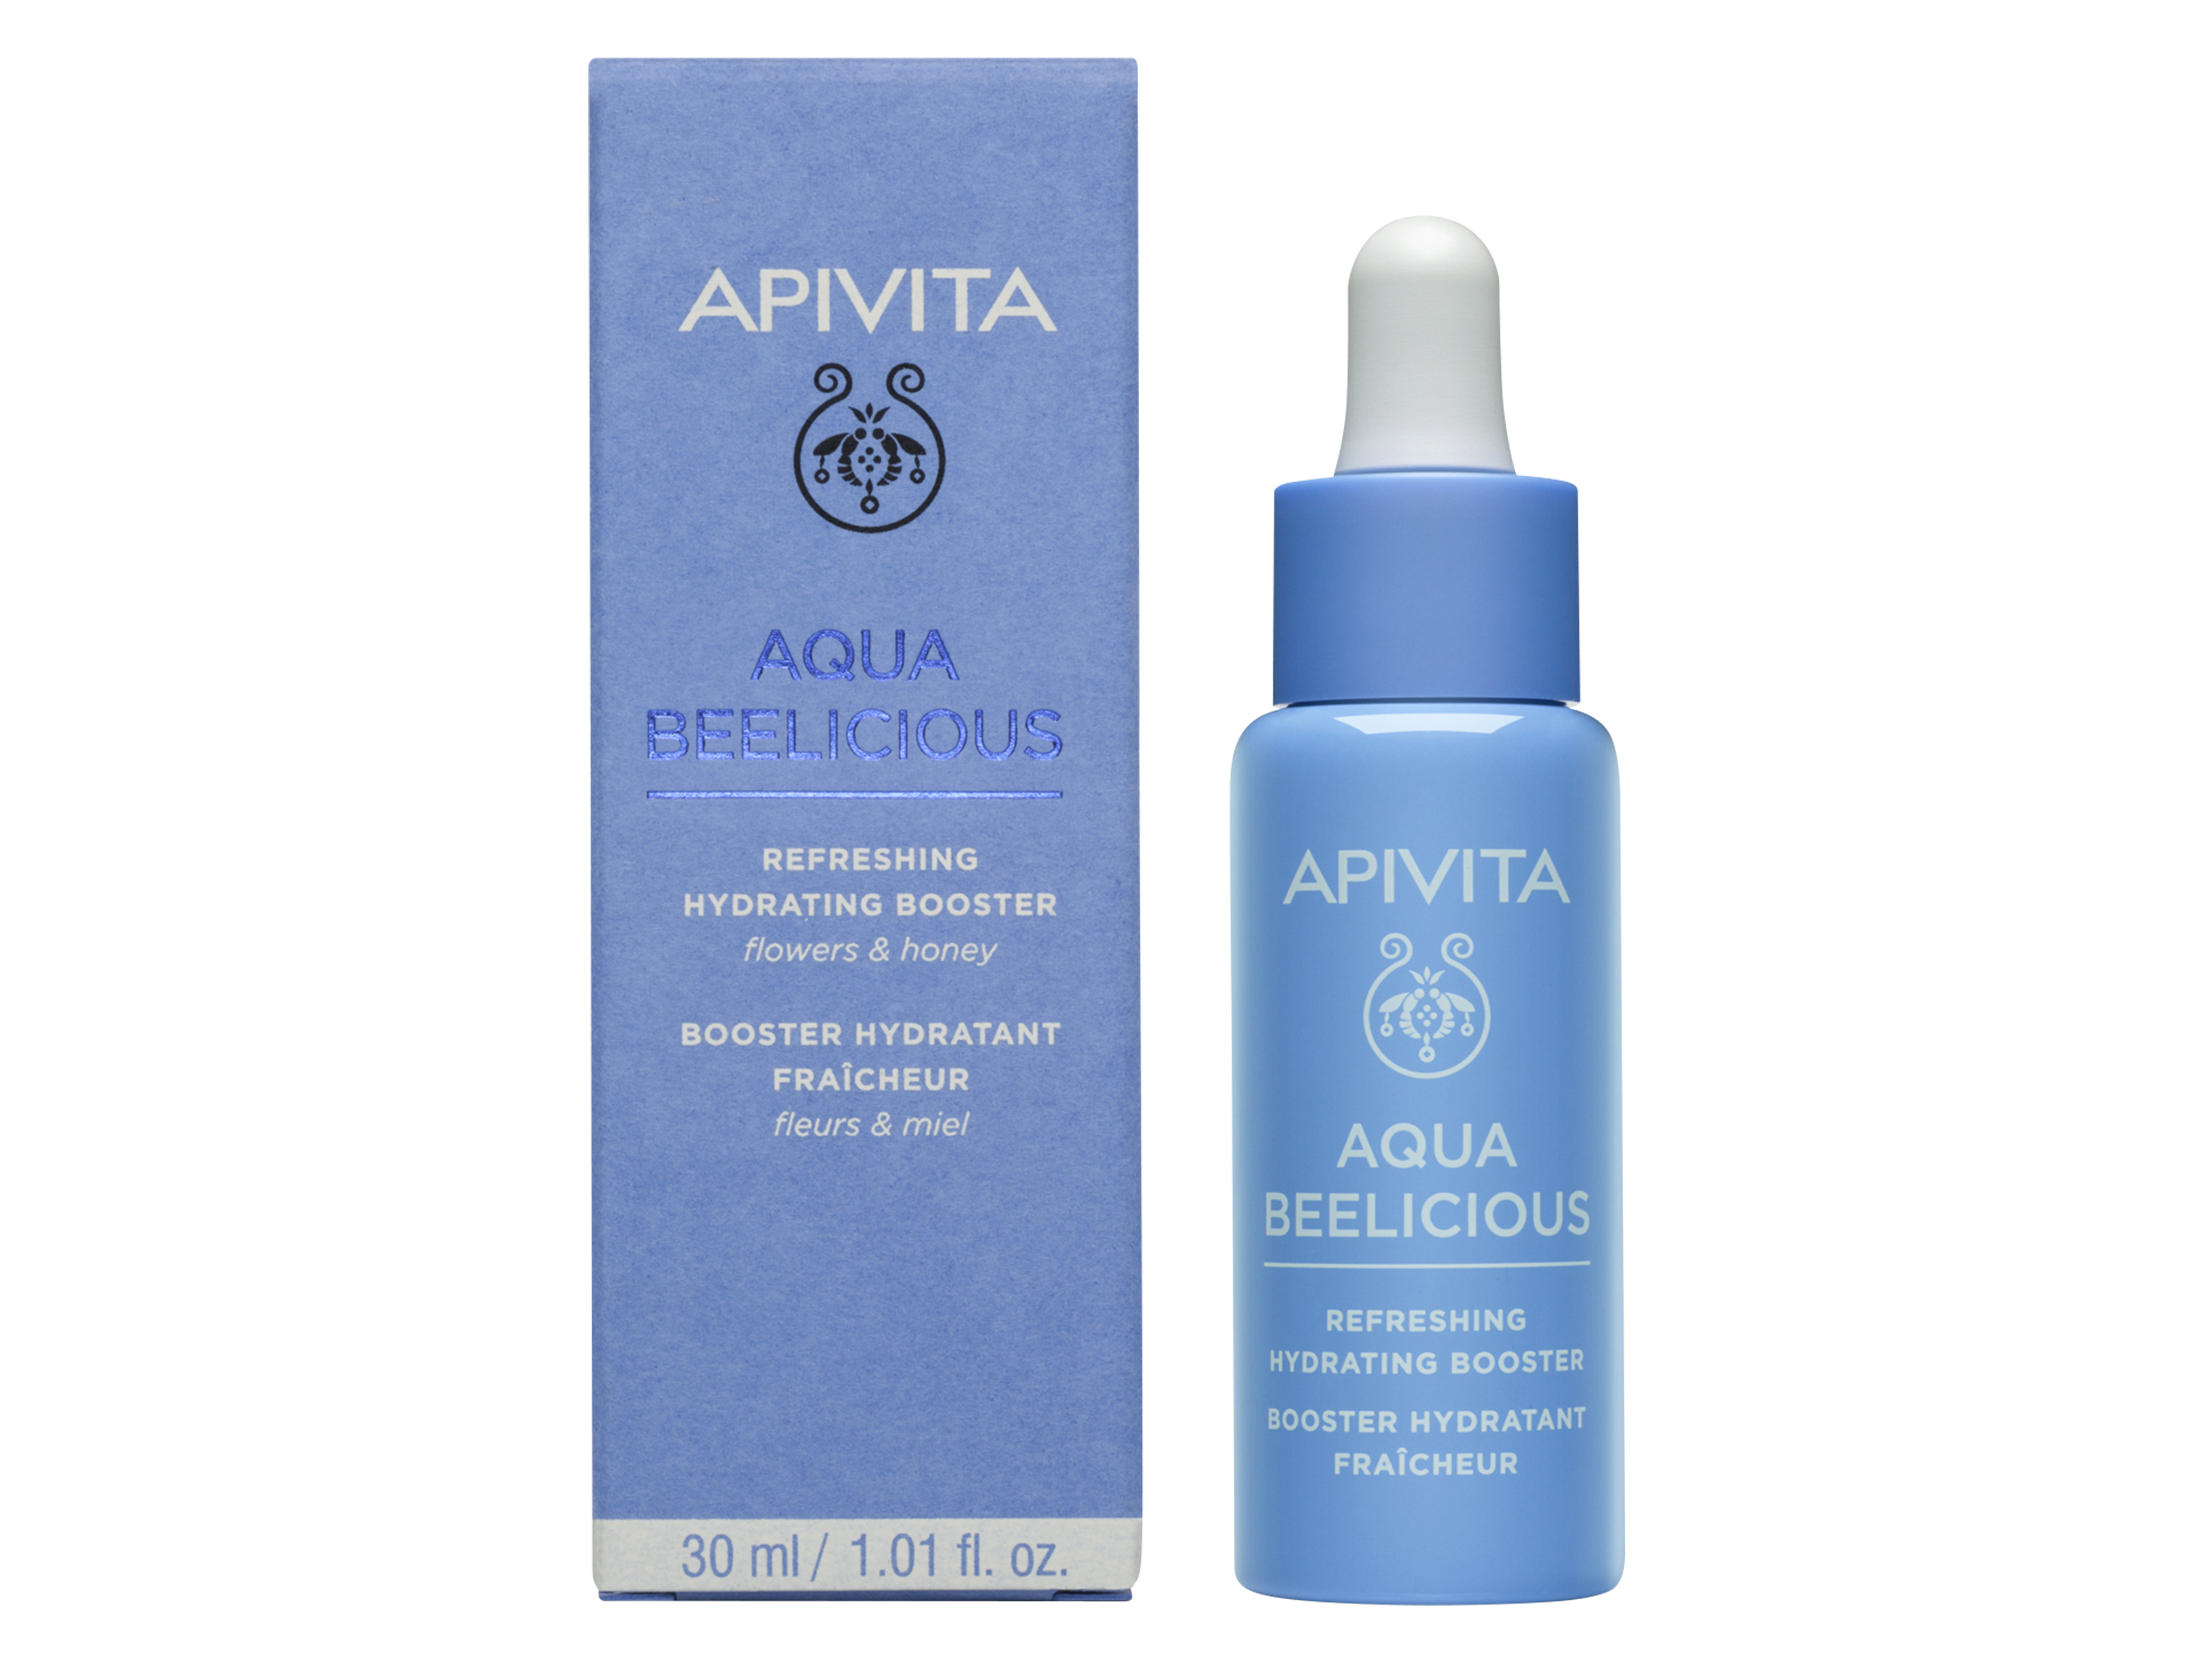 Apivita Aqua Beelicious Refreshing Hydrating Booster, 30 ml